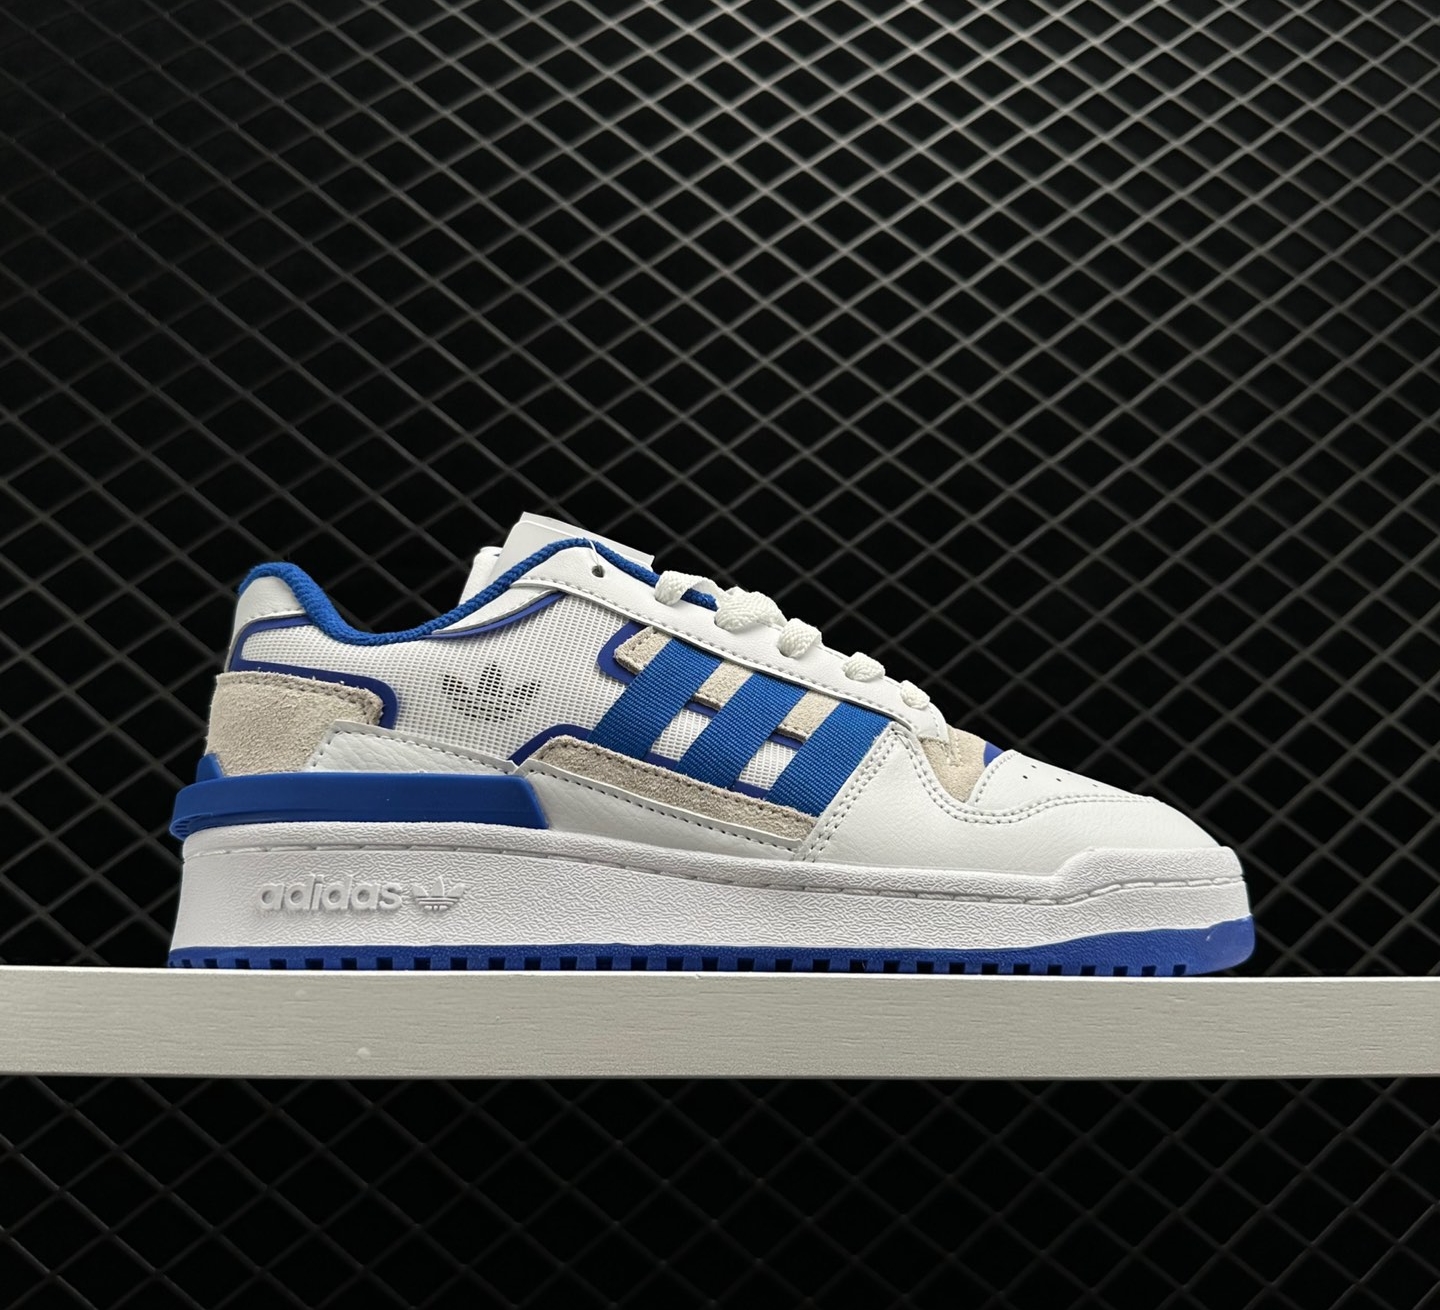 Adidas Originals Forum Exhibit Low 2 Blue White - Stylish and Classic Shoes